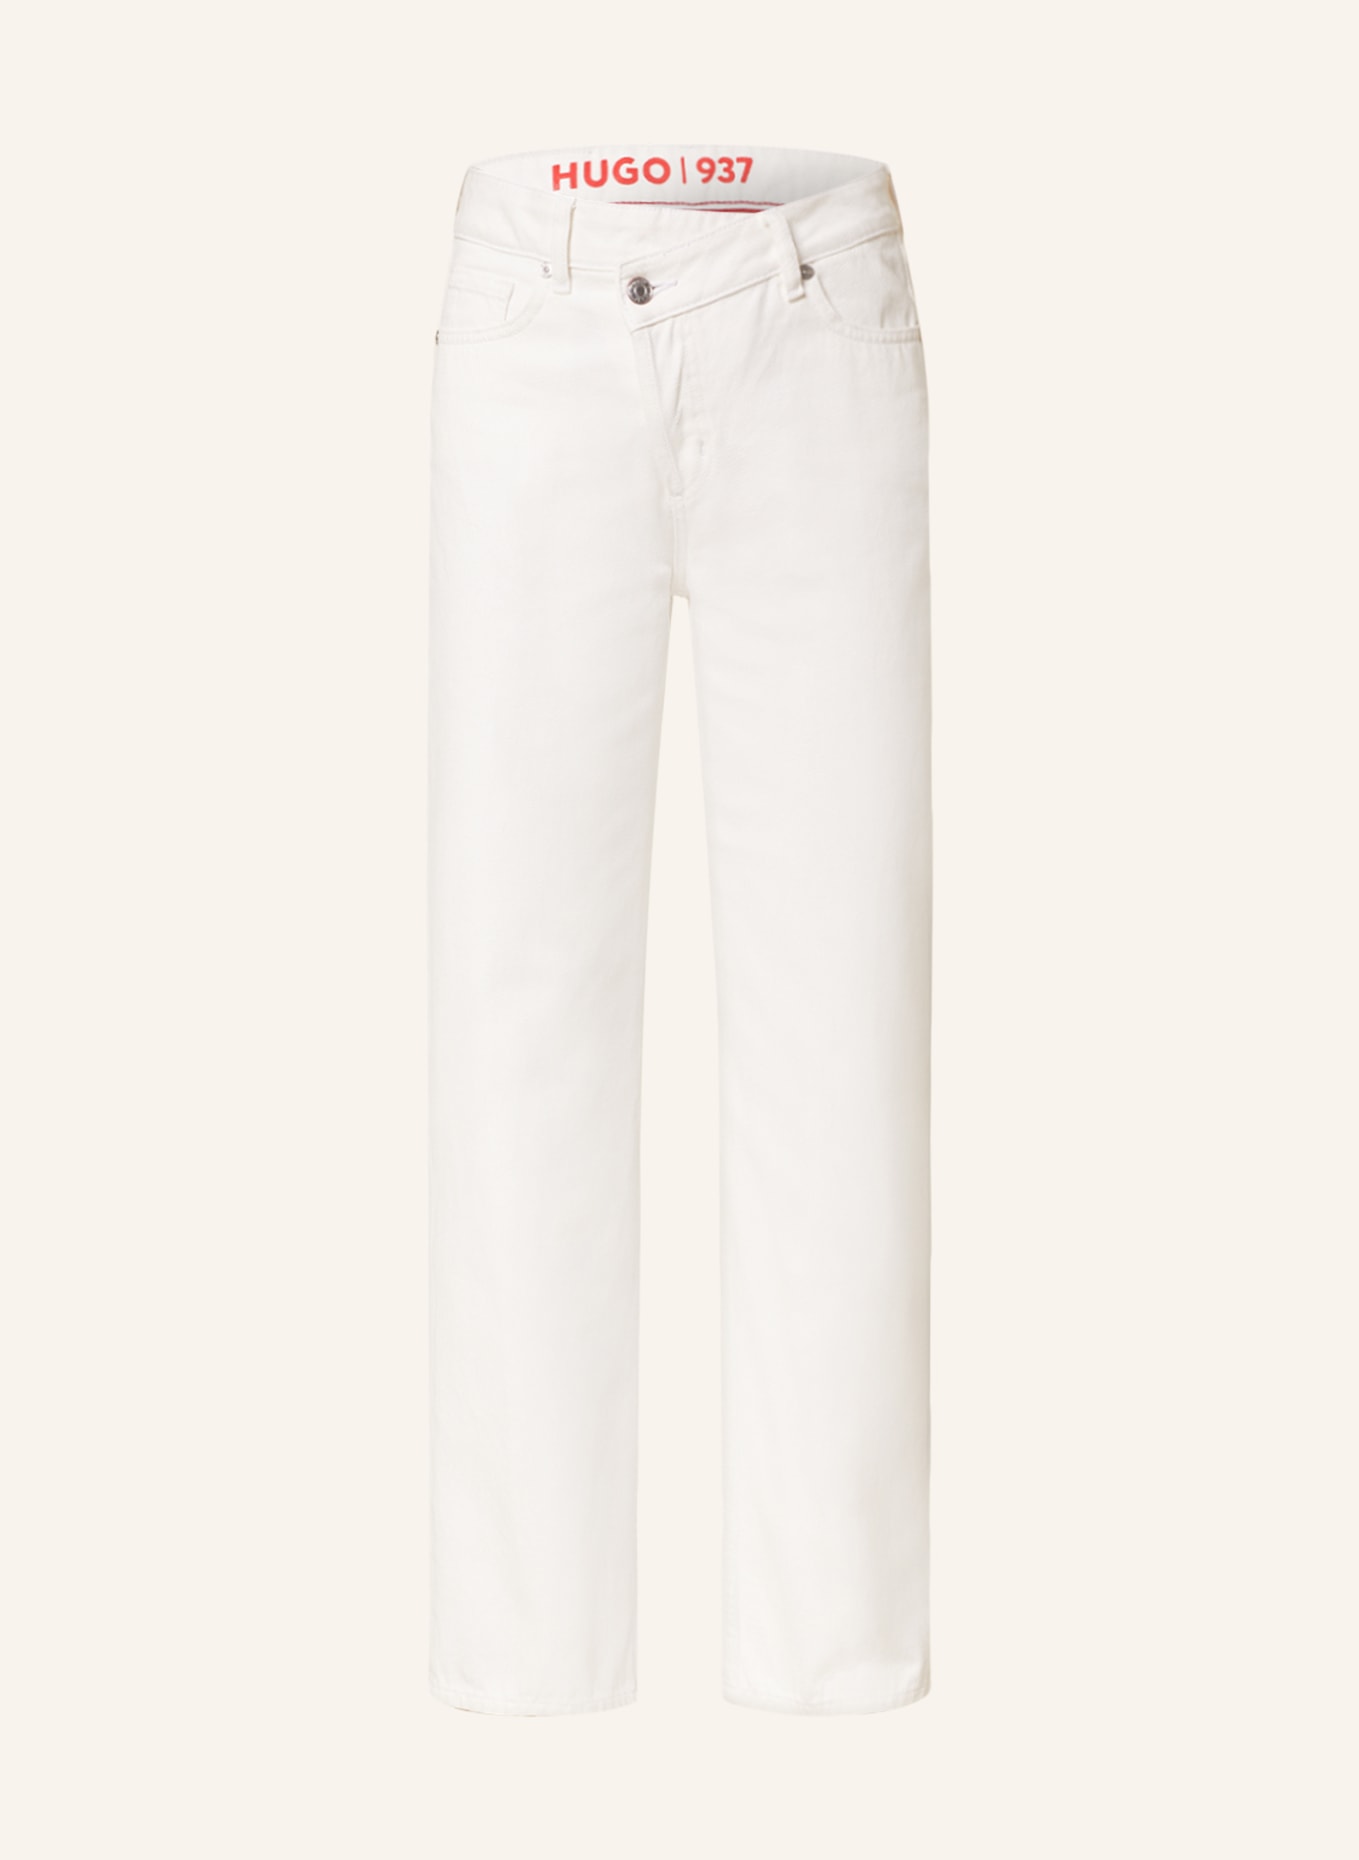 HUGO Straight Jeans 937, Farbe: ECRU (Bild 1)